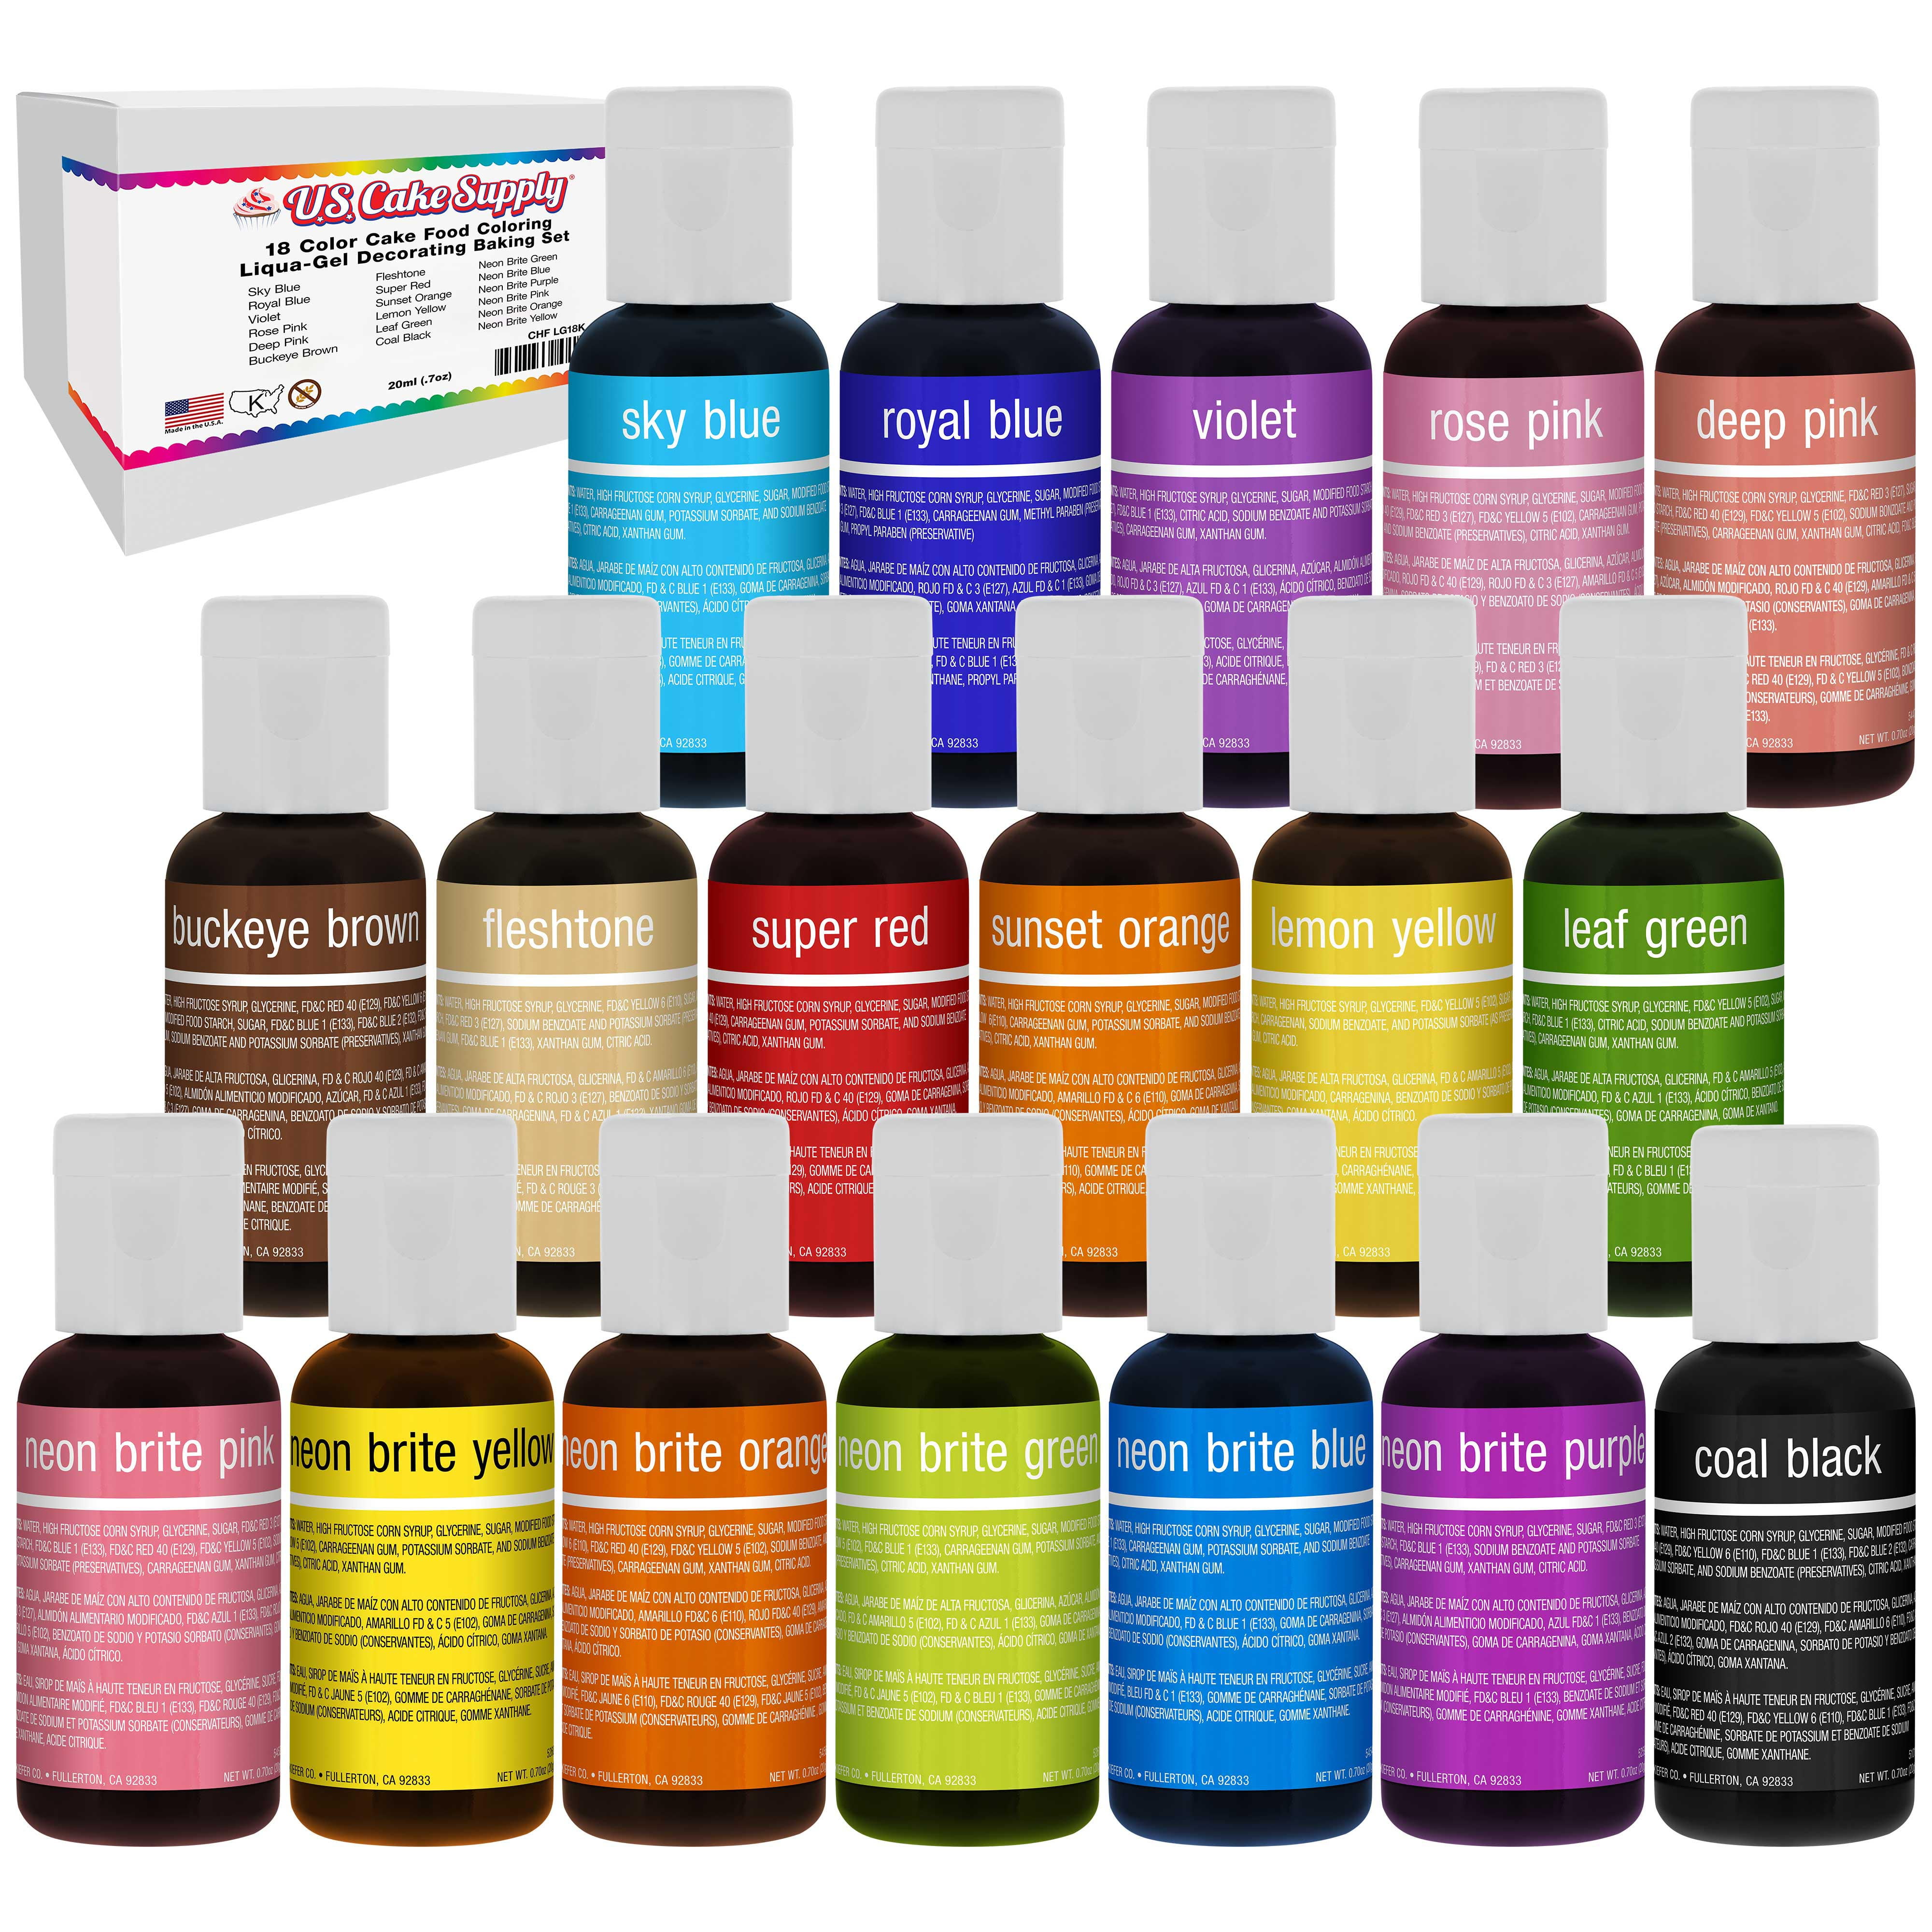 U.S. Art Supply 12 Color Liqua-Gel Slime Making Food Coloring Dye Kit - Non-Toxic, Food Grade